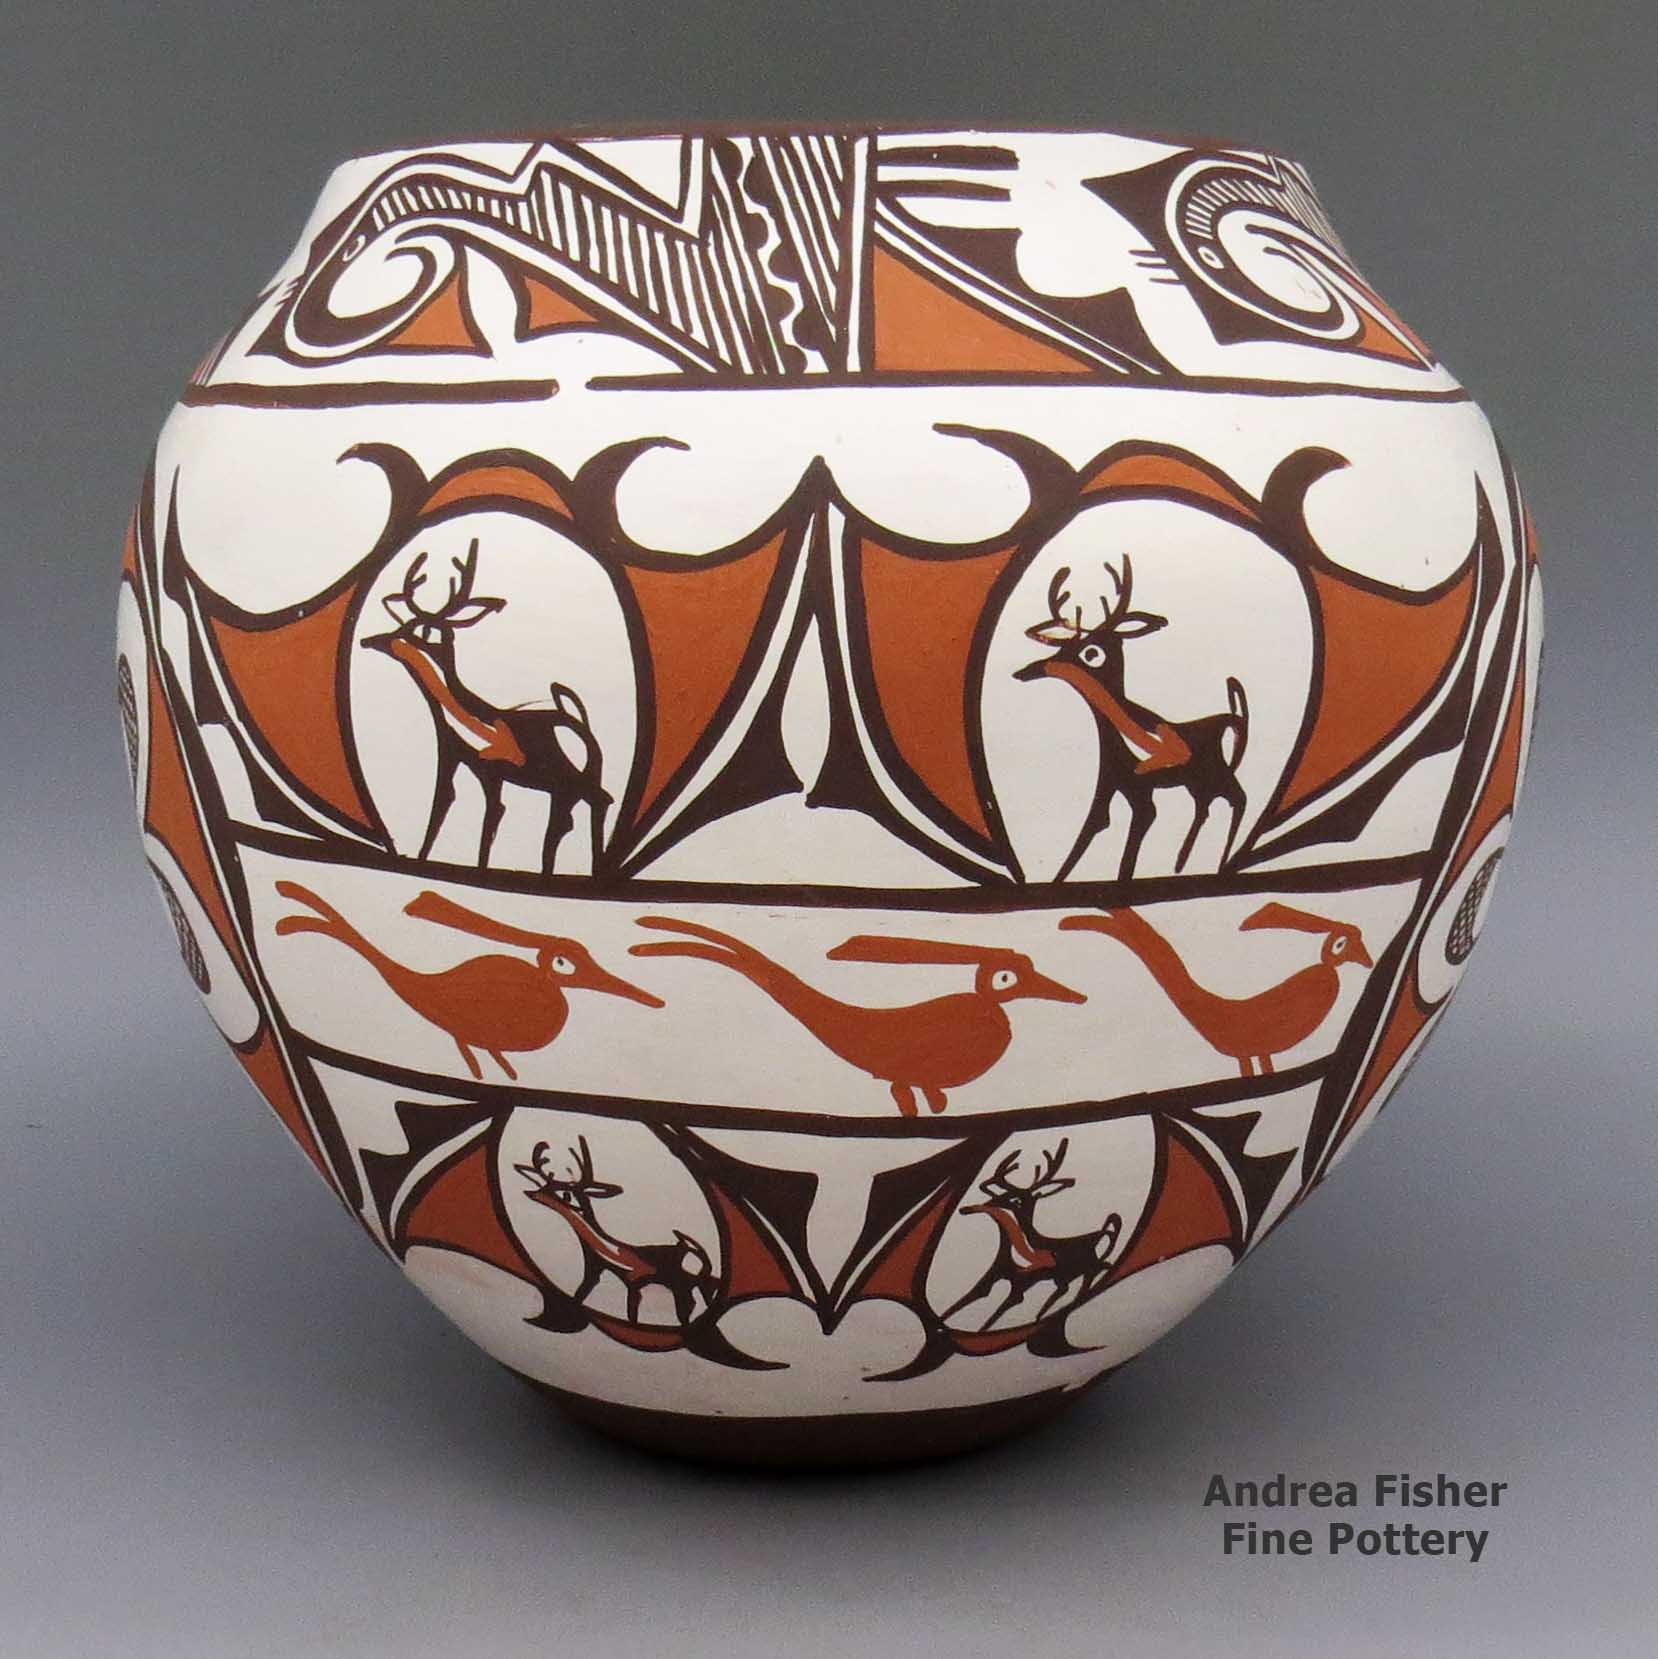 Amazingly designed pottery studio – Stencilit